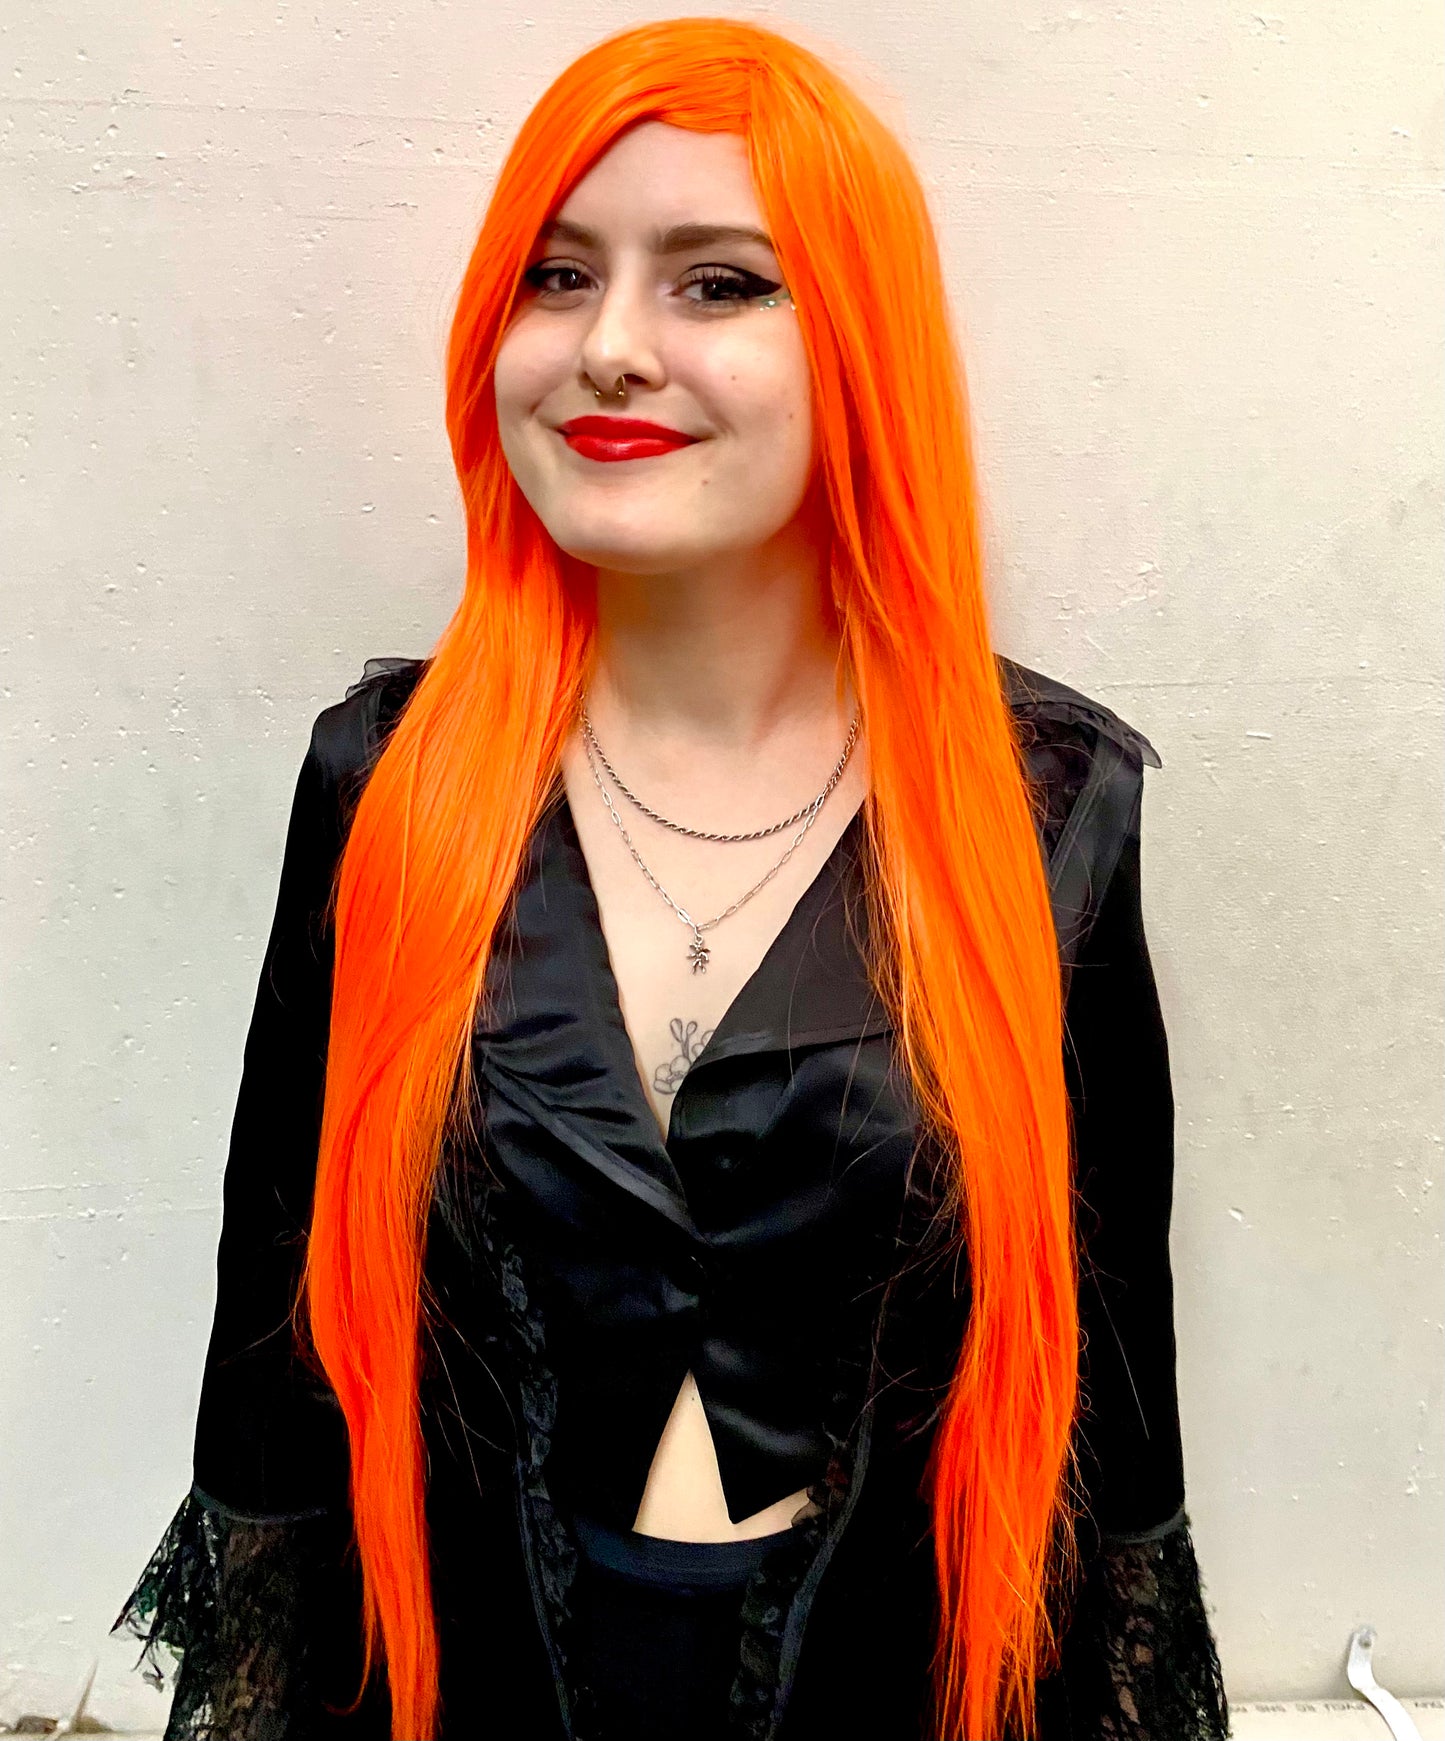 Deluxe Extra-Long Straight Orange Wig